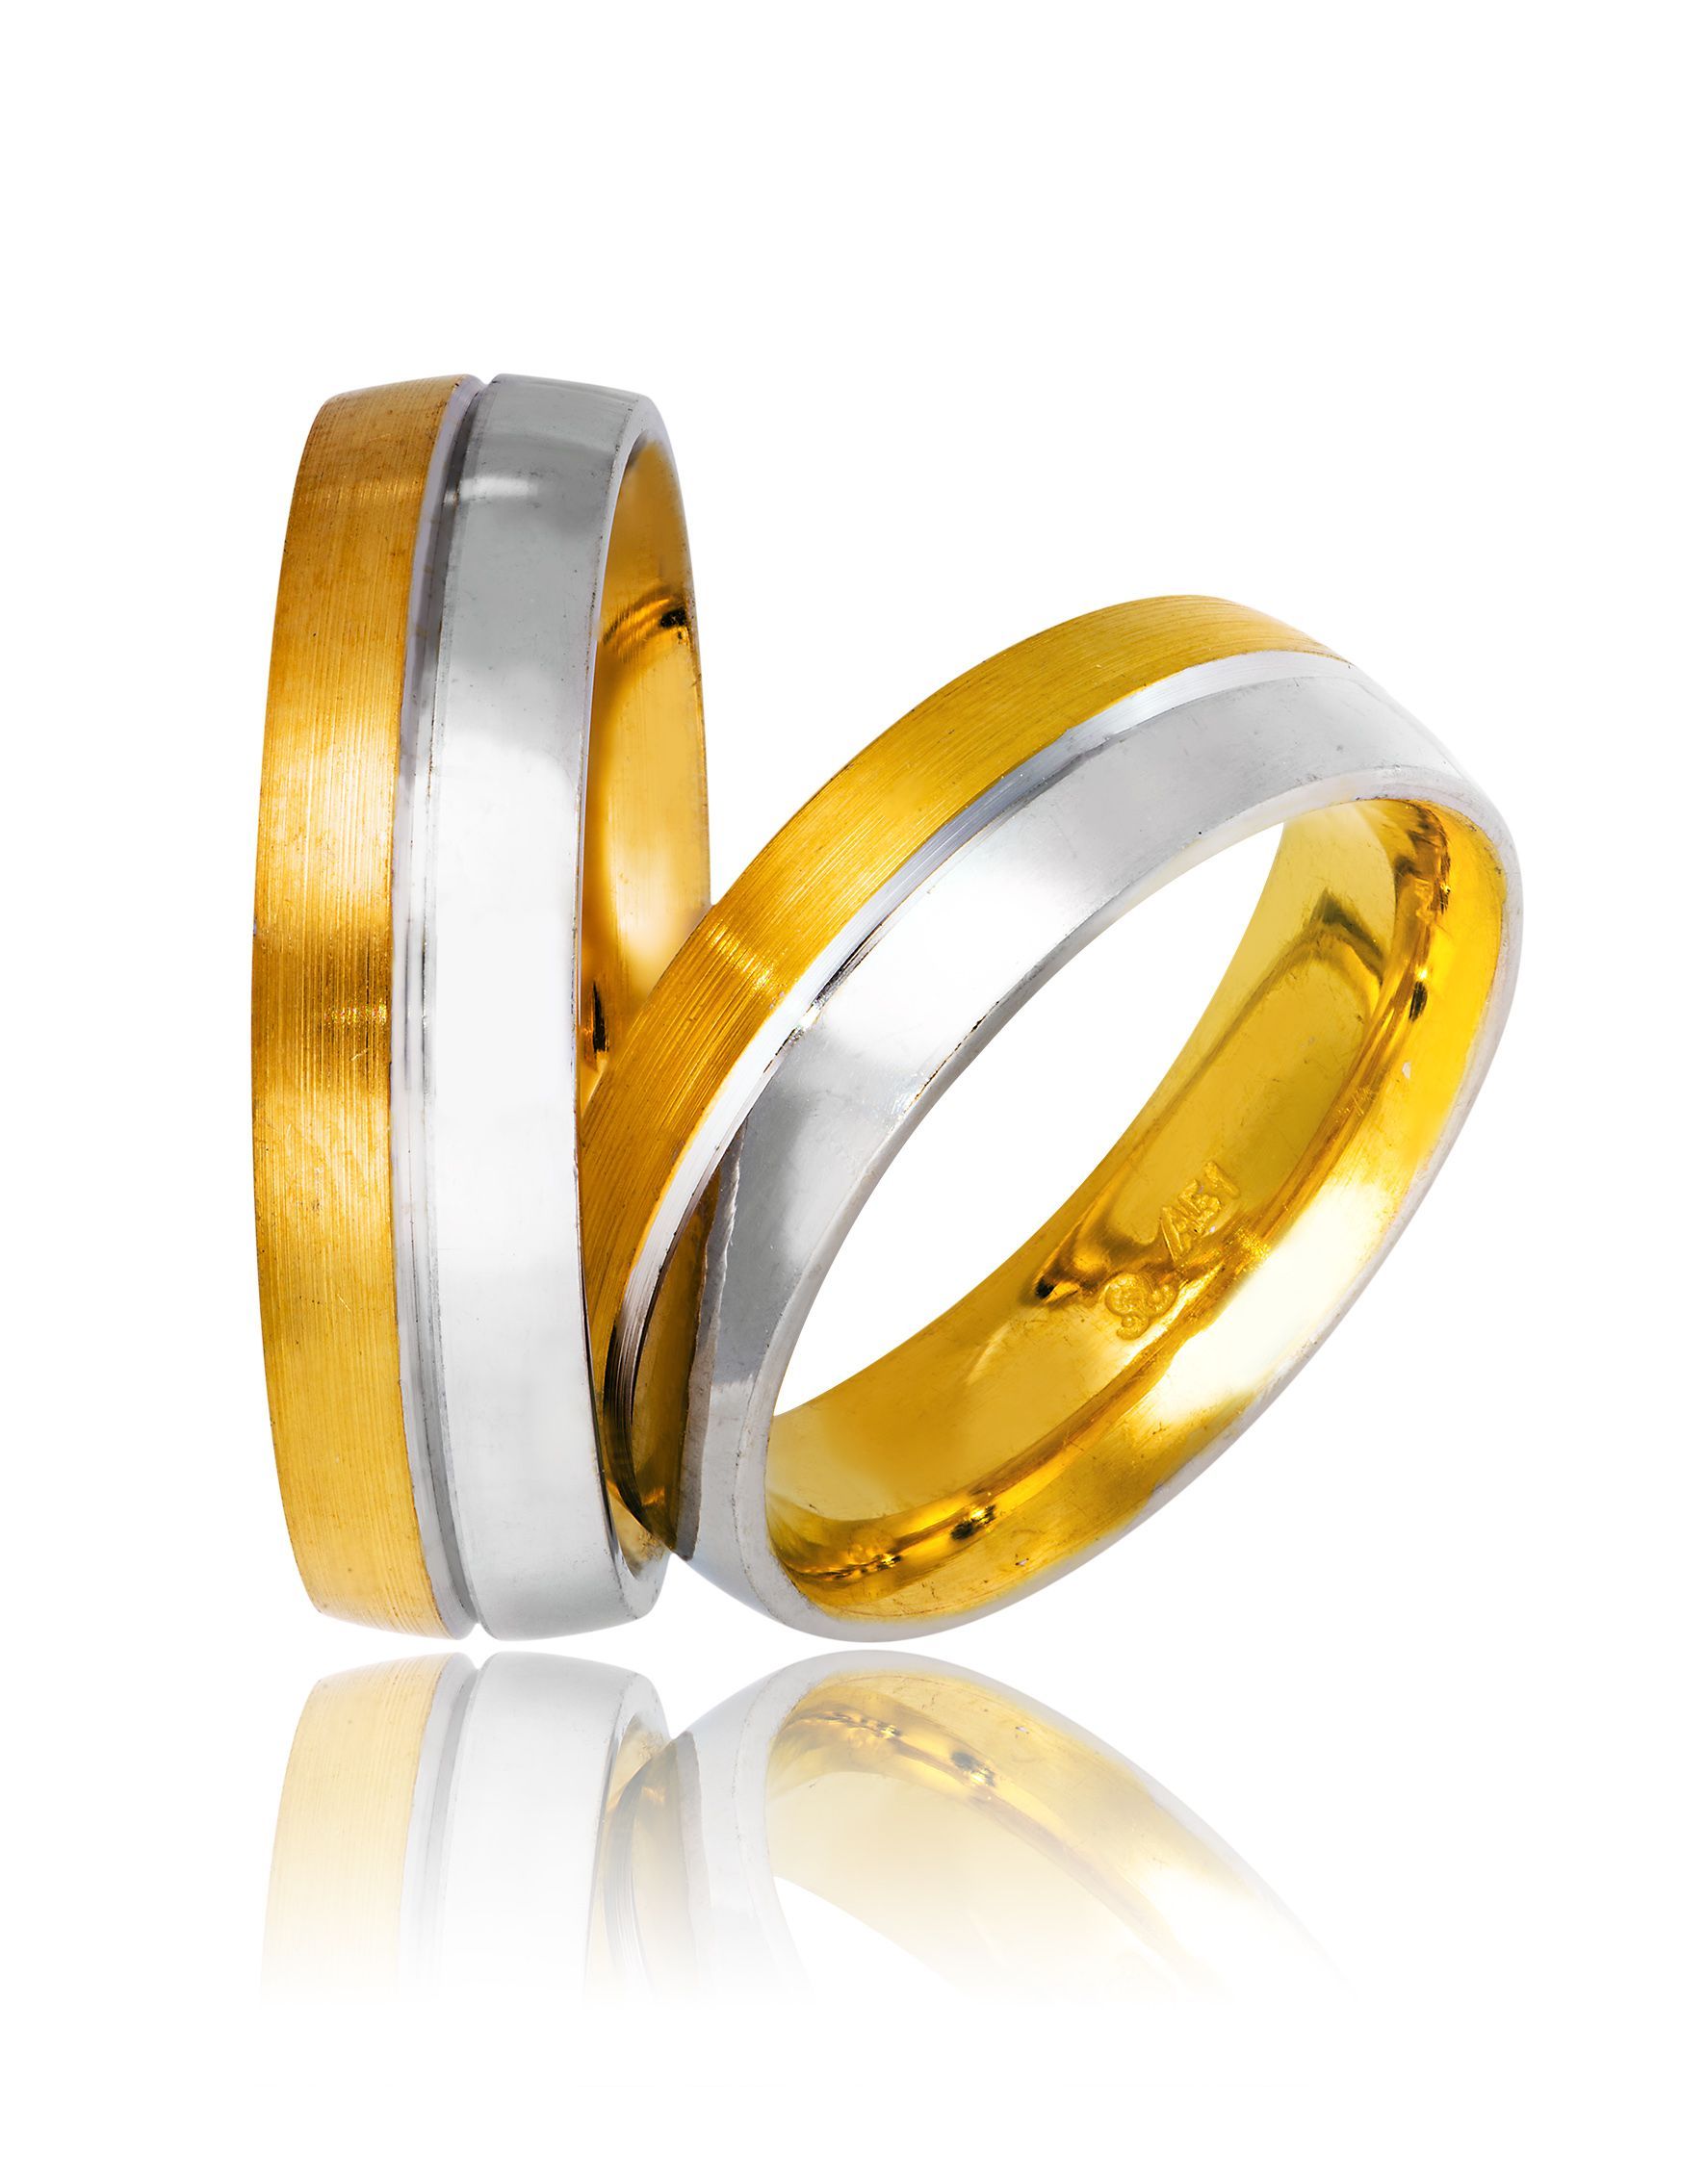 White gold & gold wedding rings 6mm (code 735)